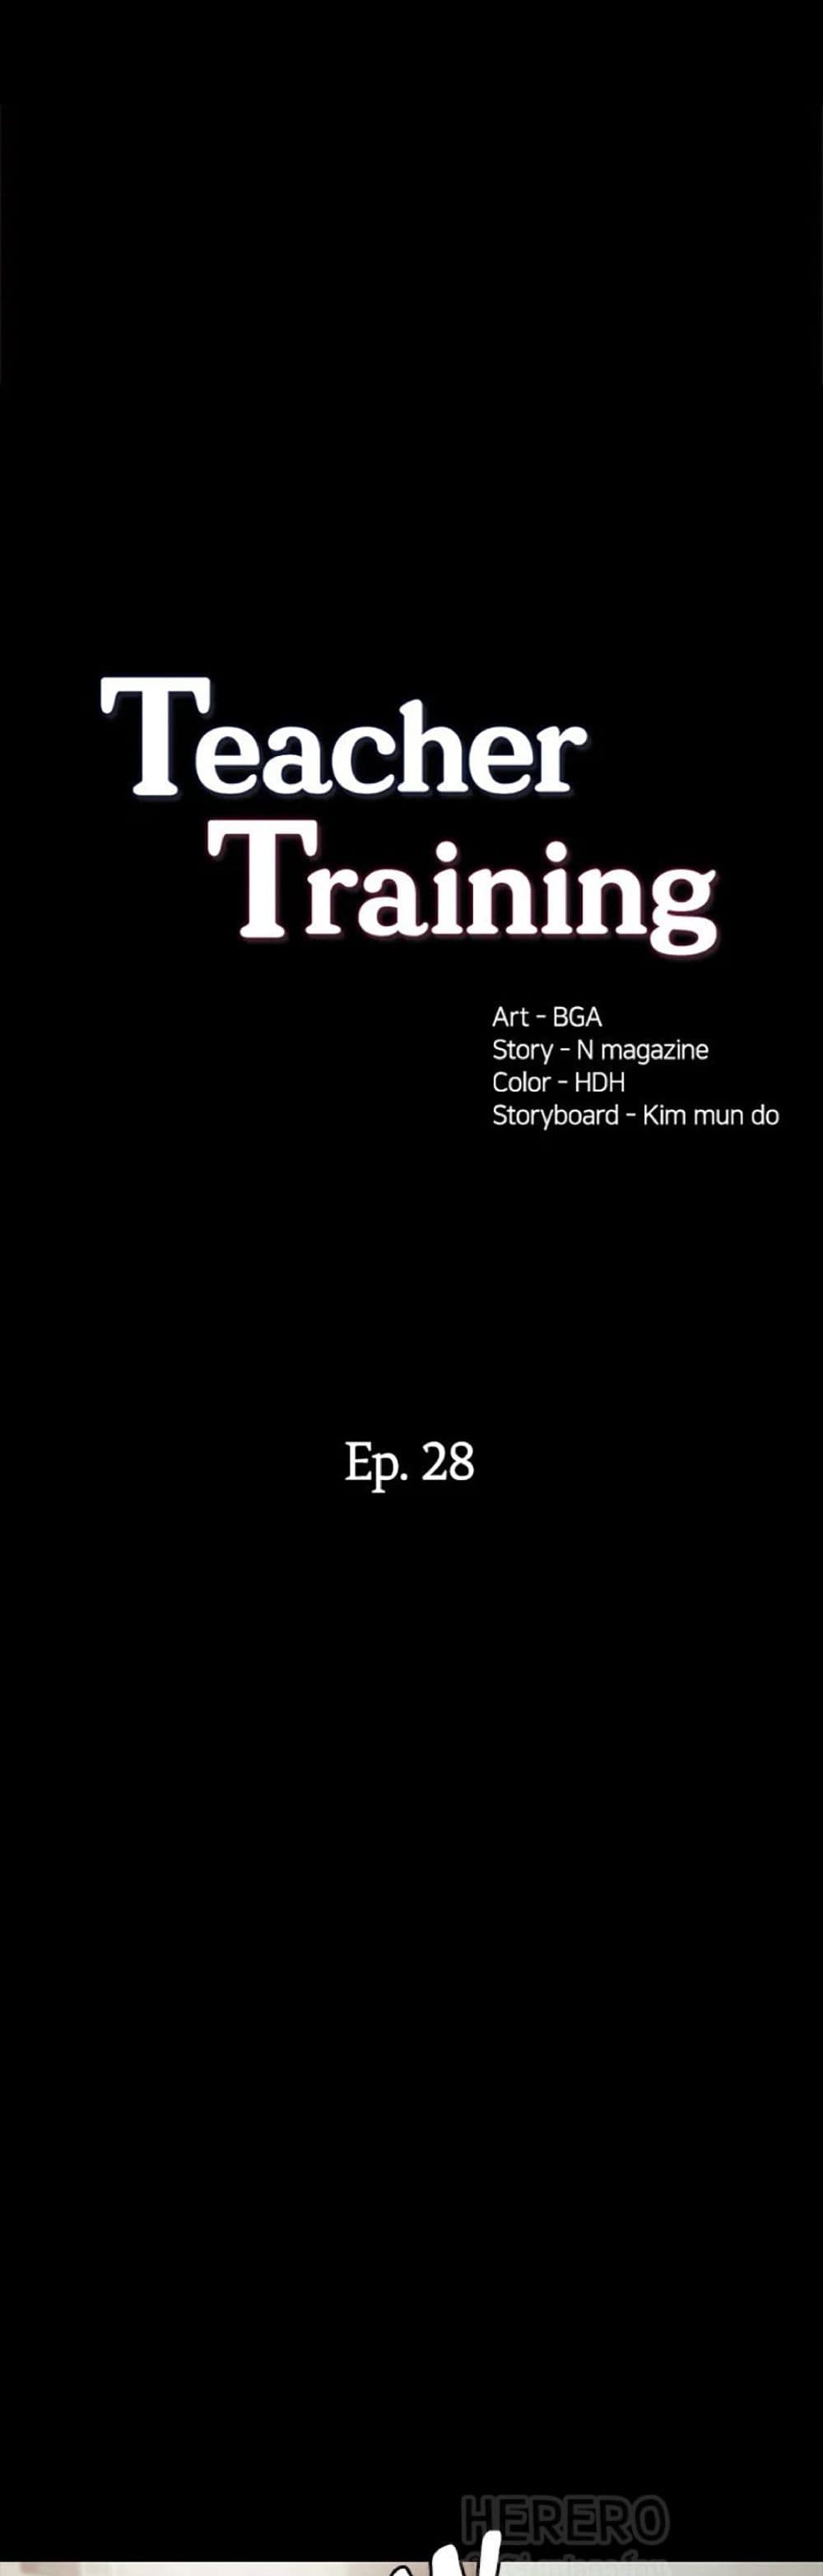 Teaching Practice 28-28